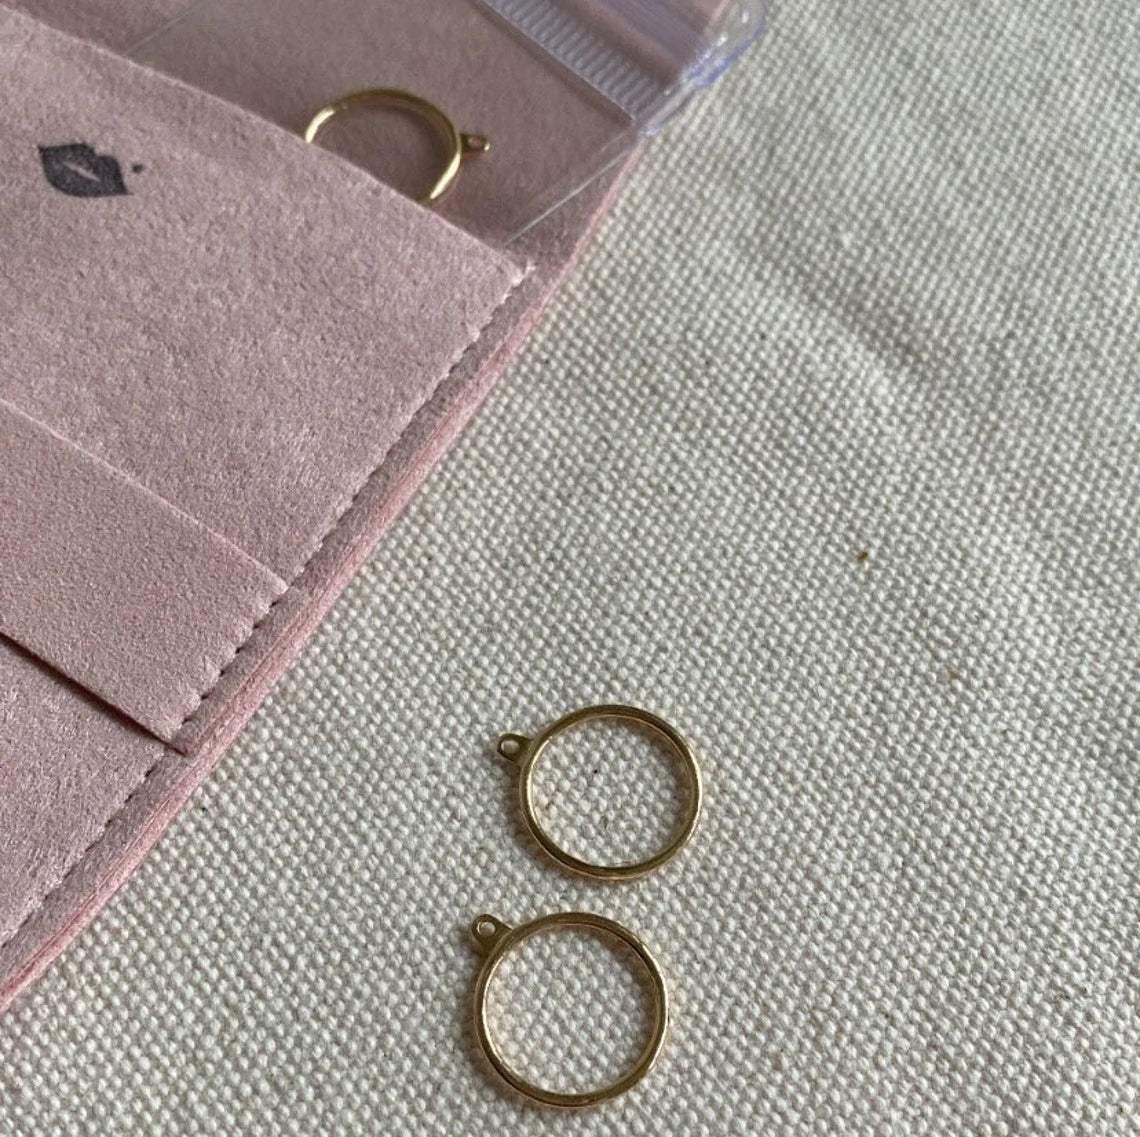 14k Solid Gold Ear Jacket - Circle Earrings / Natural Diamond Sets